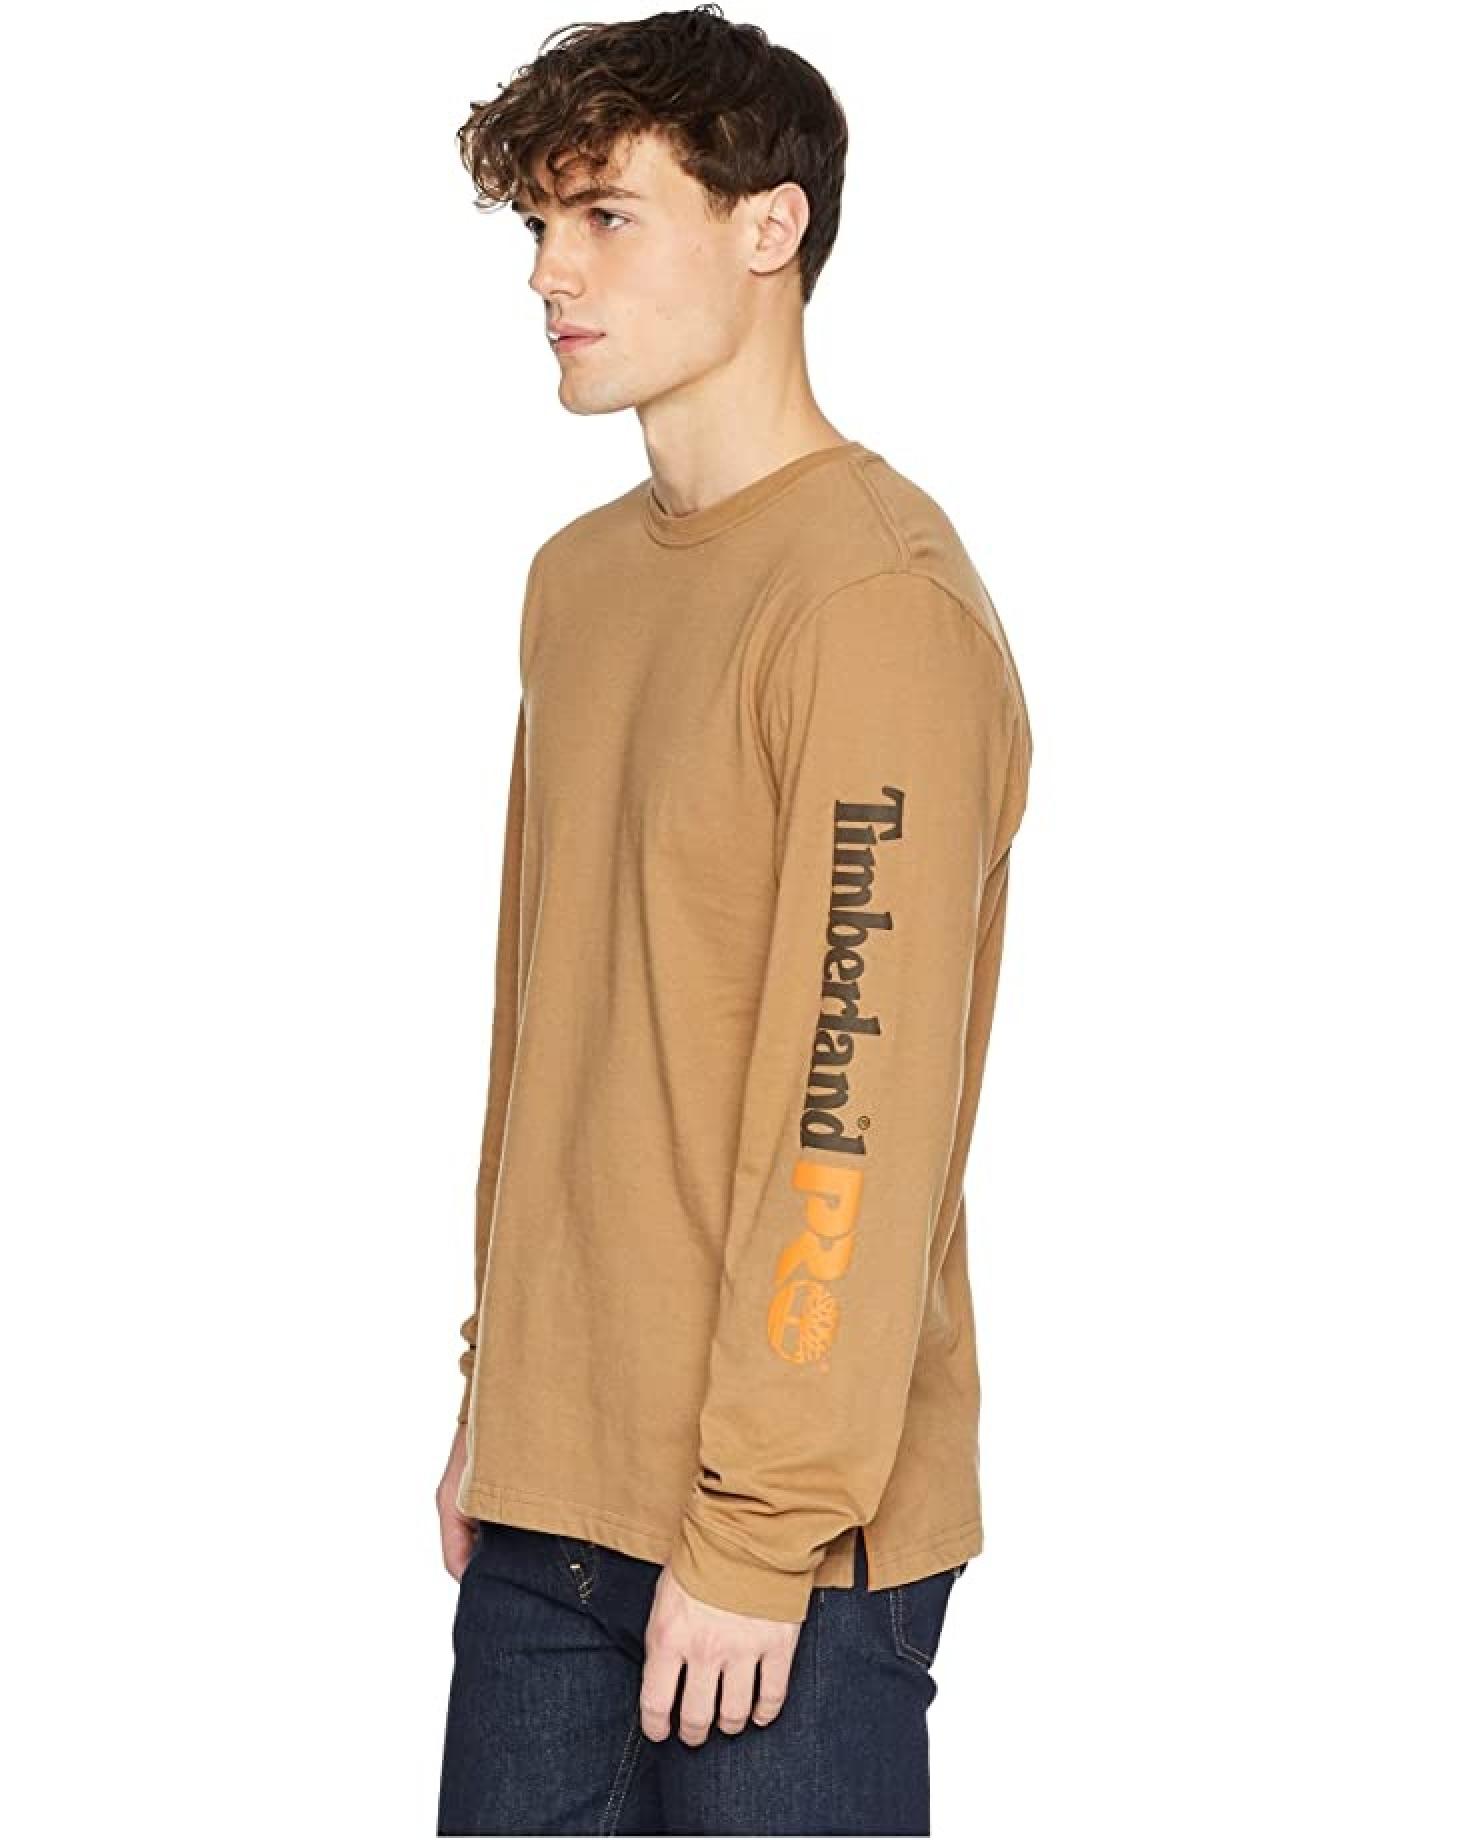 Timberland PRO Base Plate Blended Long Sleeve T-Shirt w/ Logo